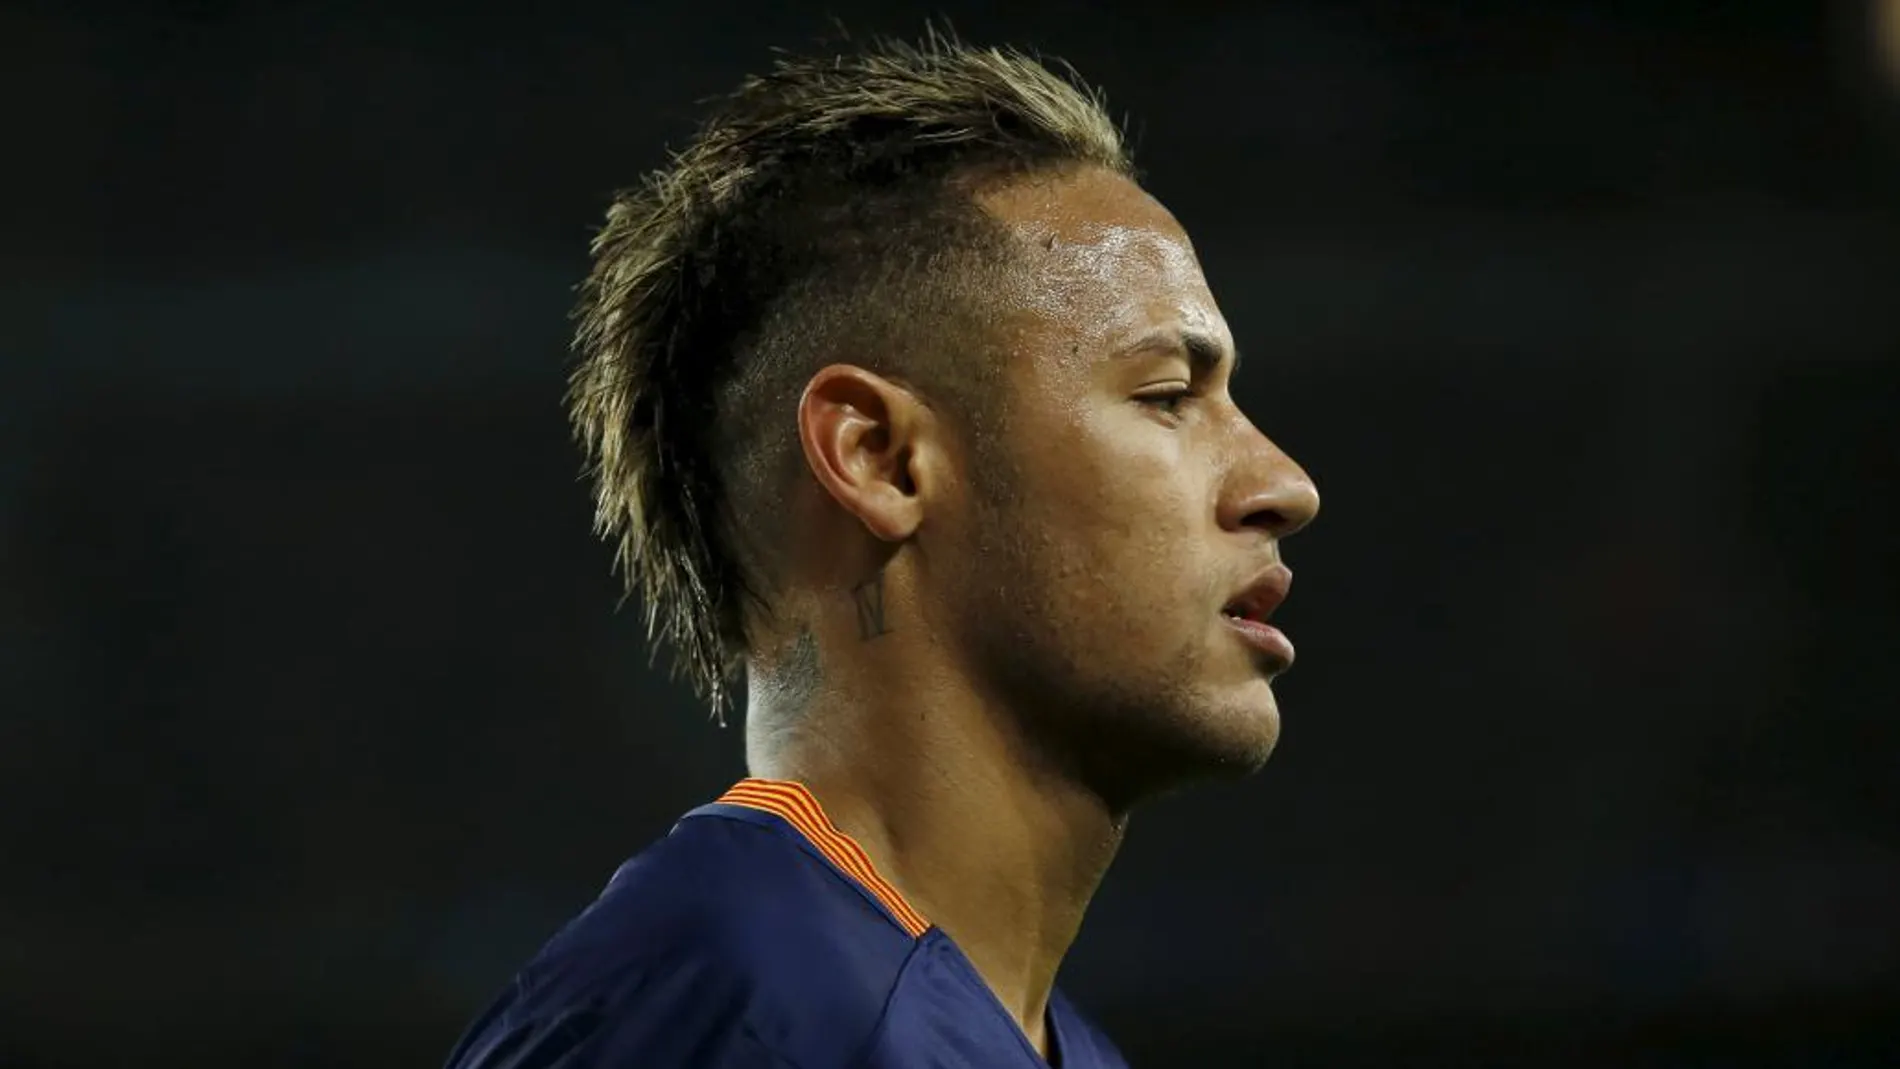 Neymar niega el presunto delito